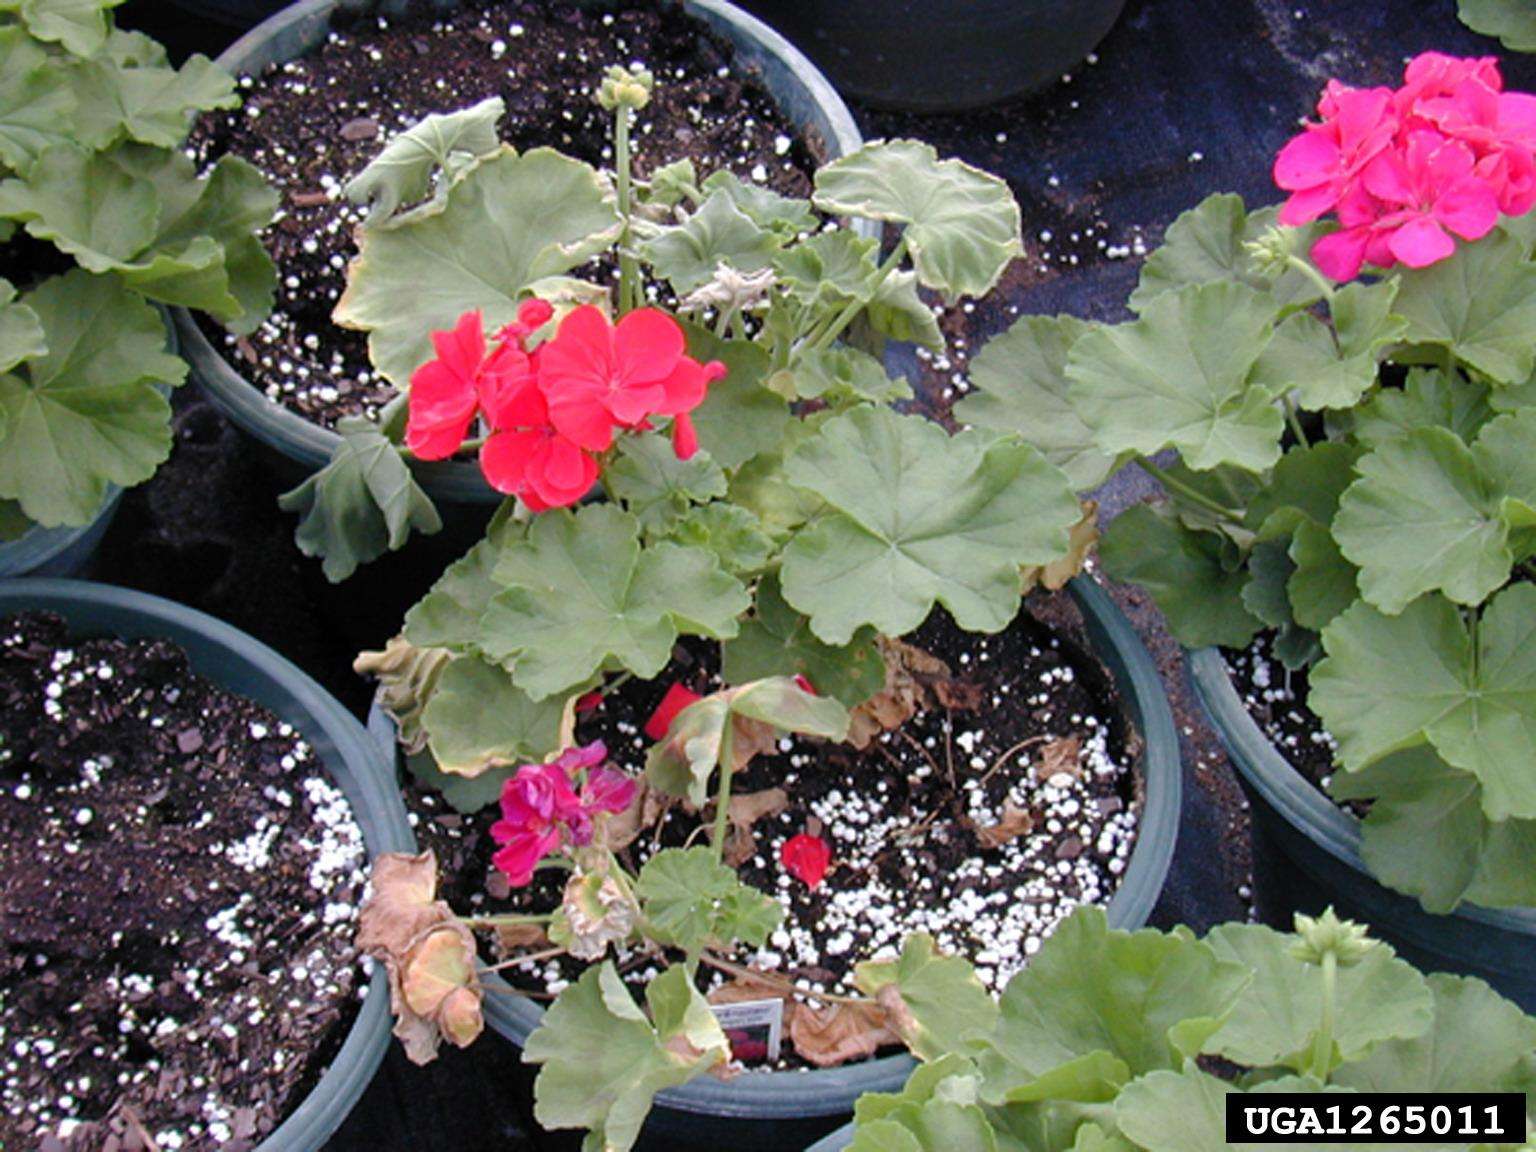 Close up of geraniums showing symptoms of wilt.